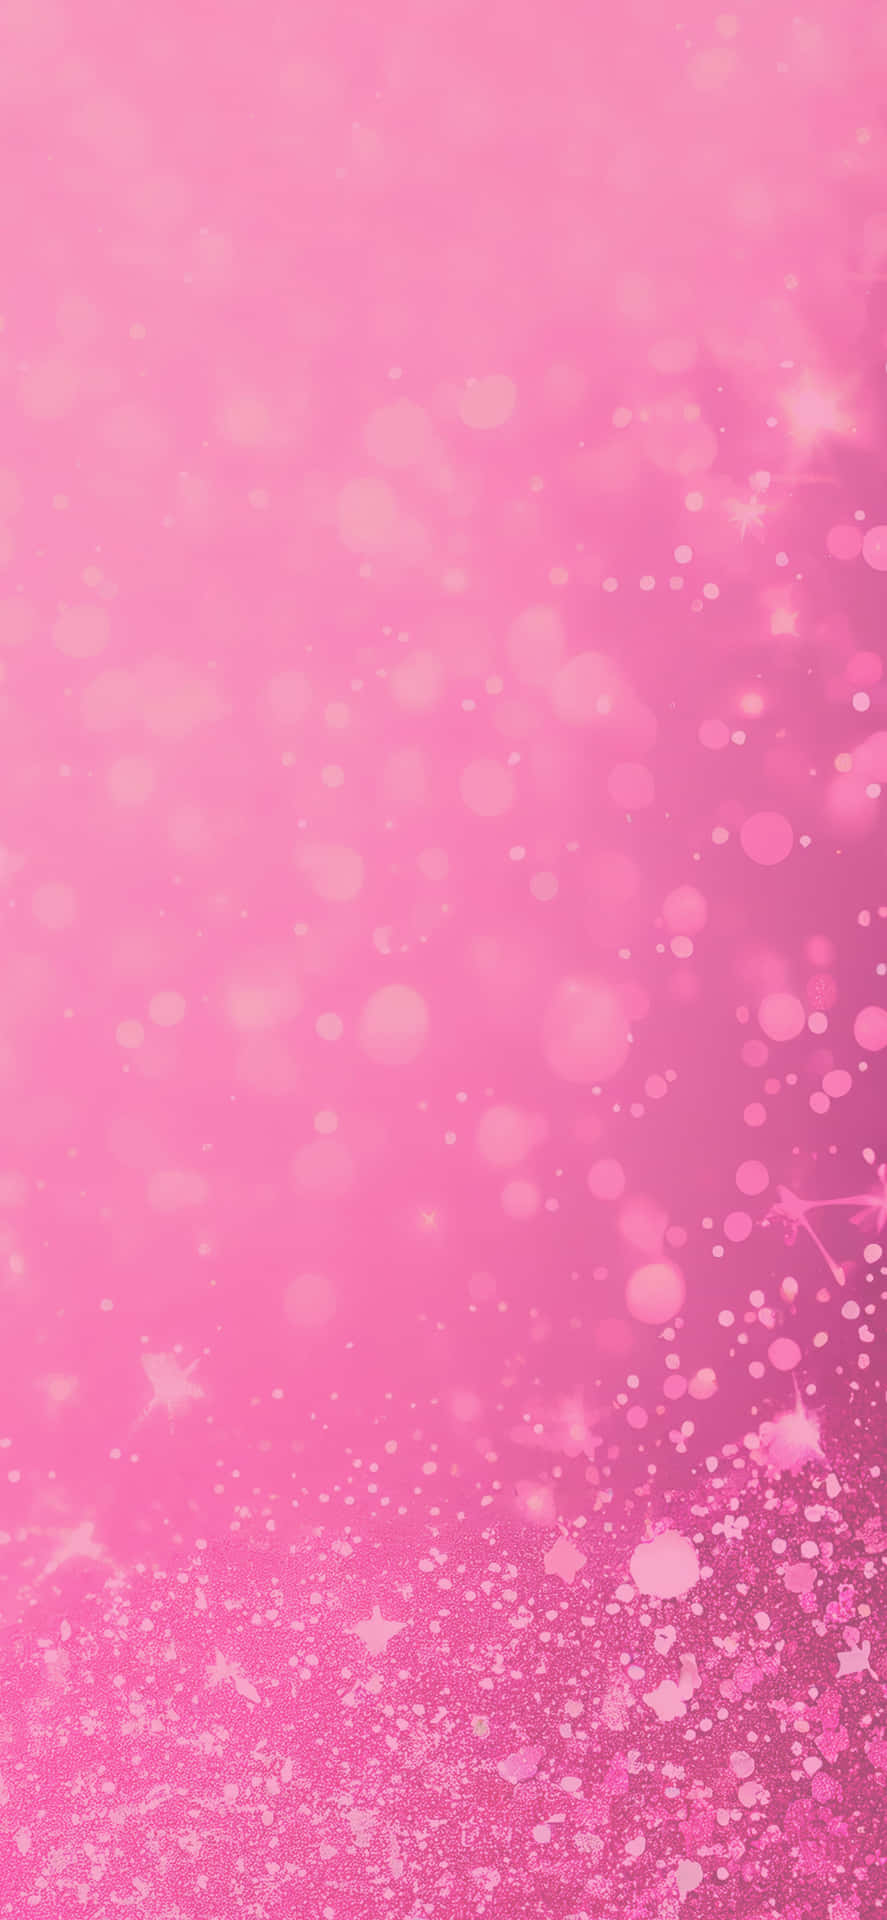 Caption: Enchanting Pink Sparkle Background